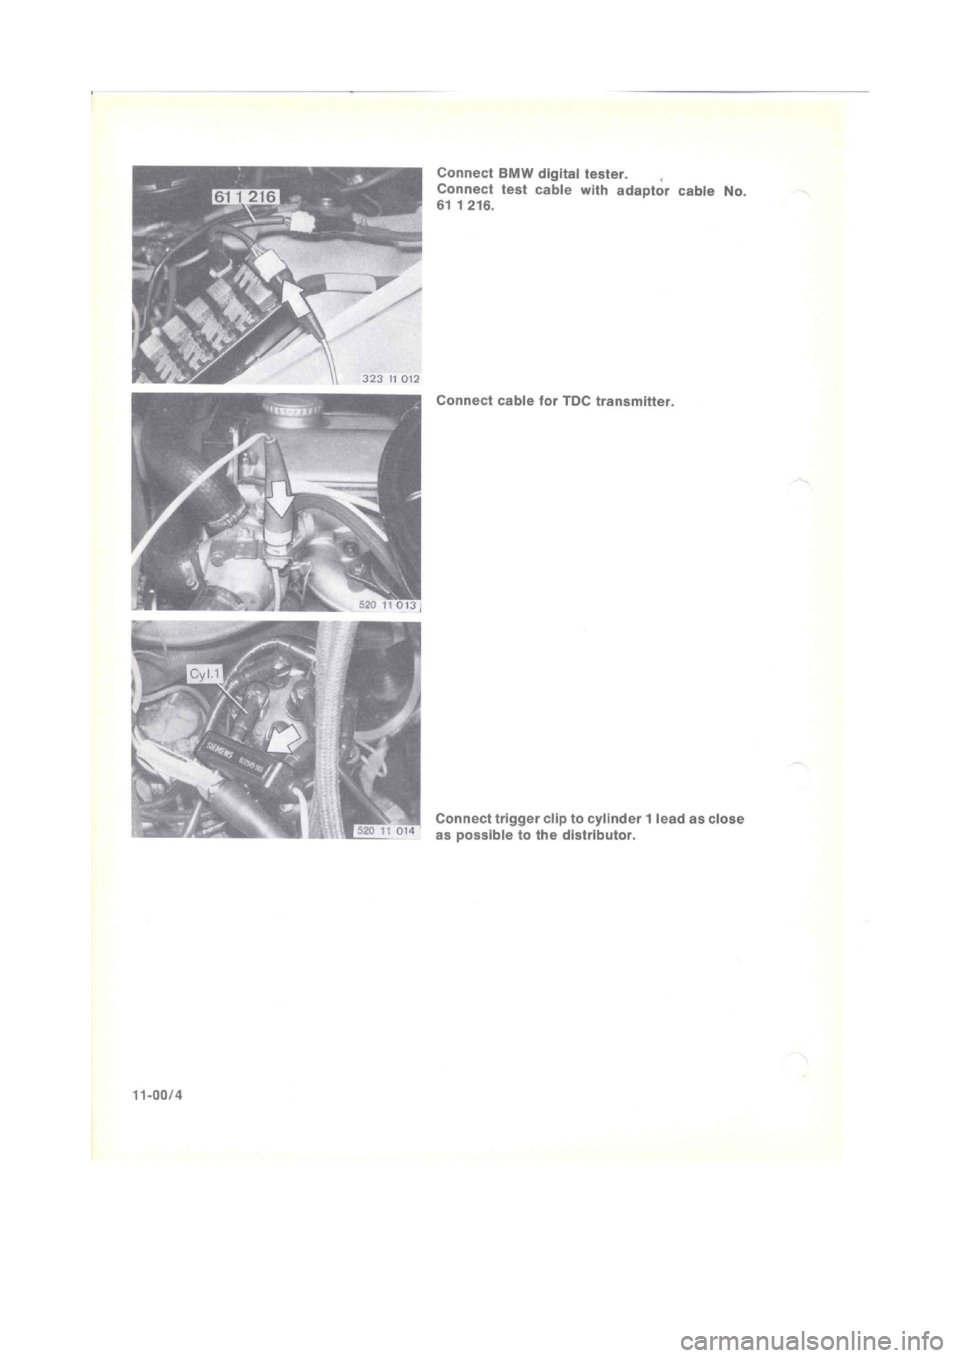 BMW 320i 1977 E21 M20 Engine Service Manual 